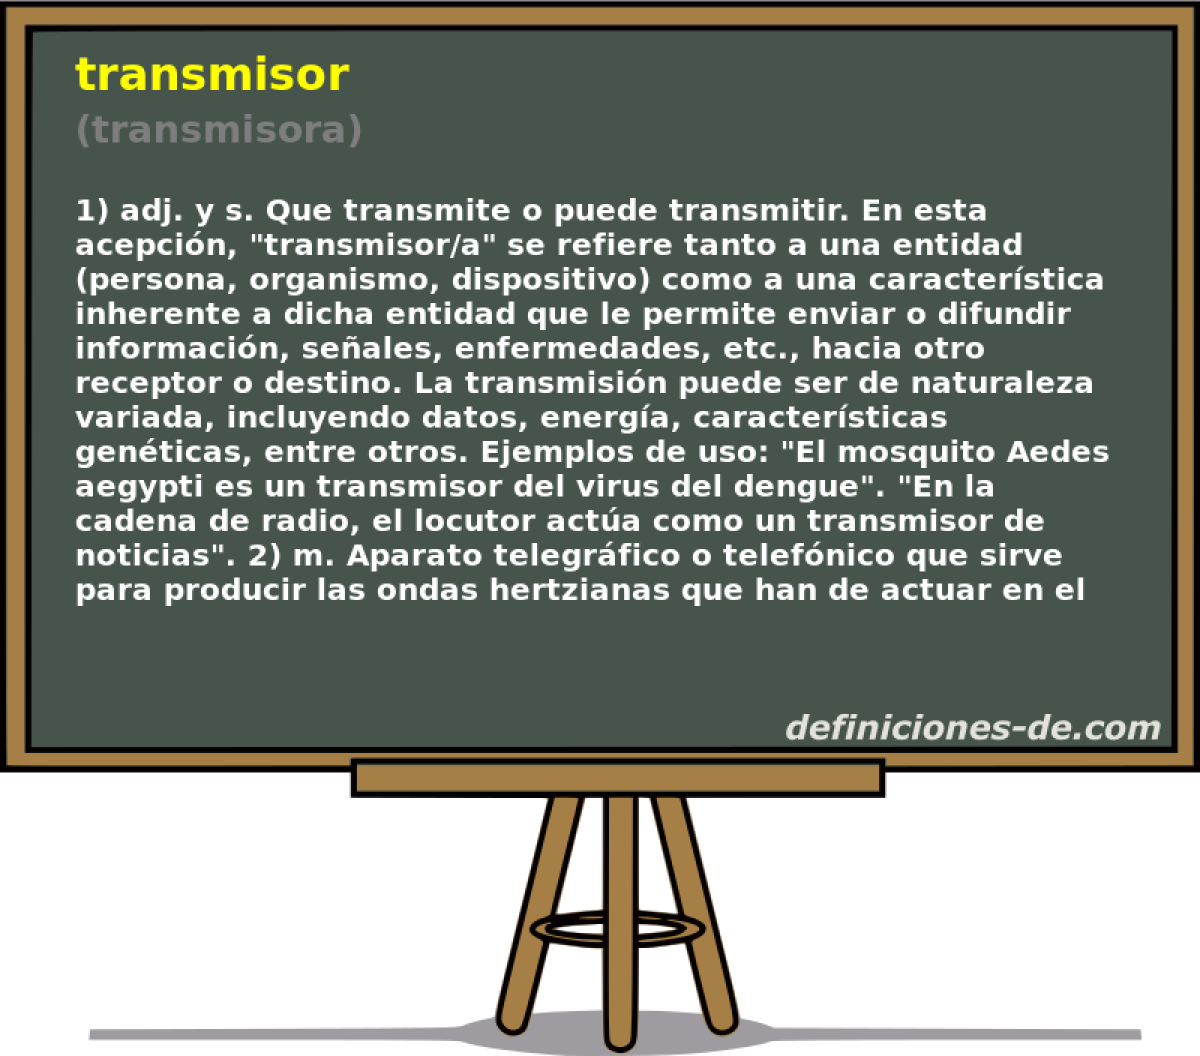 transmisor (transmisora)